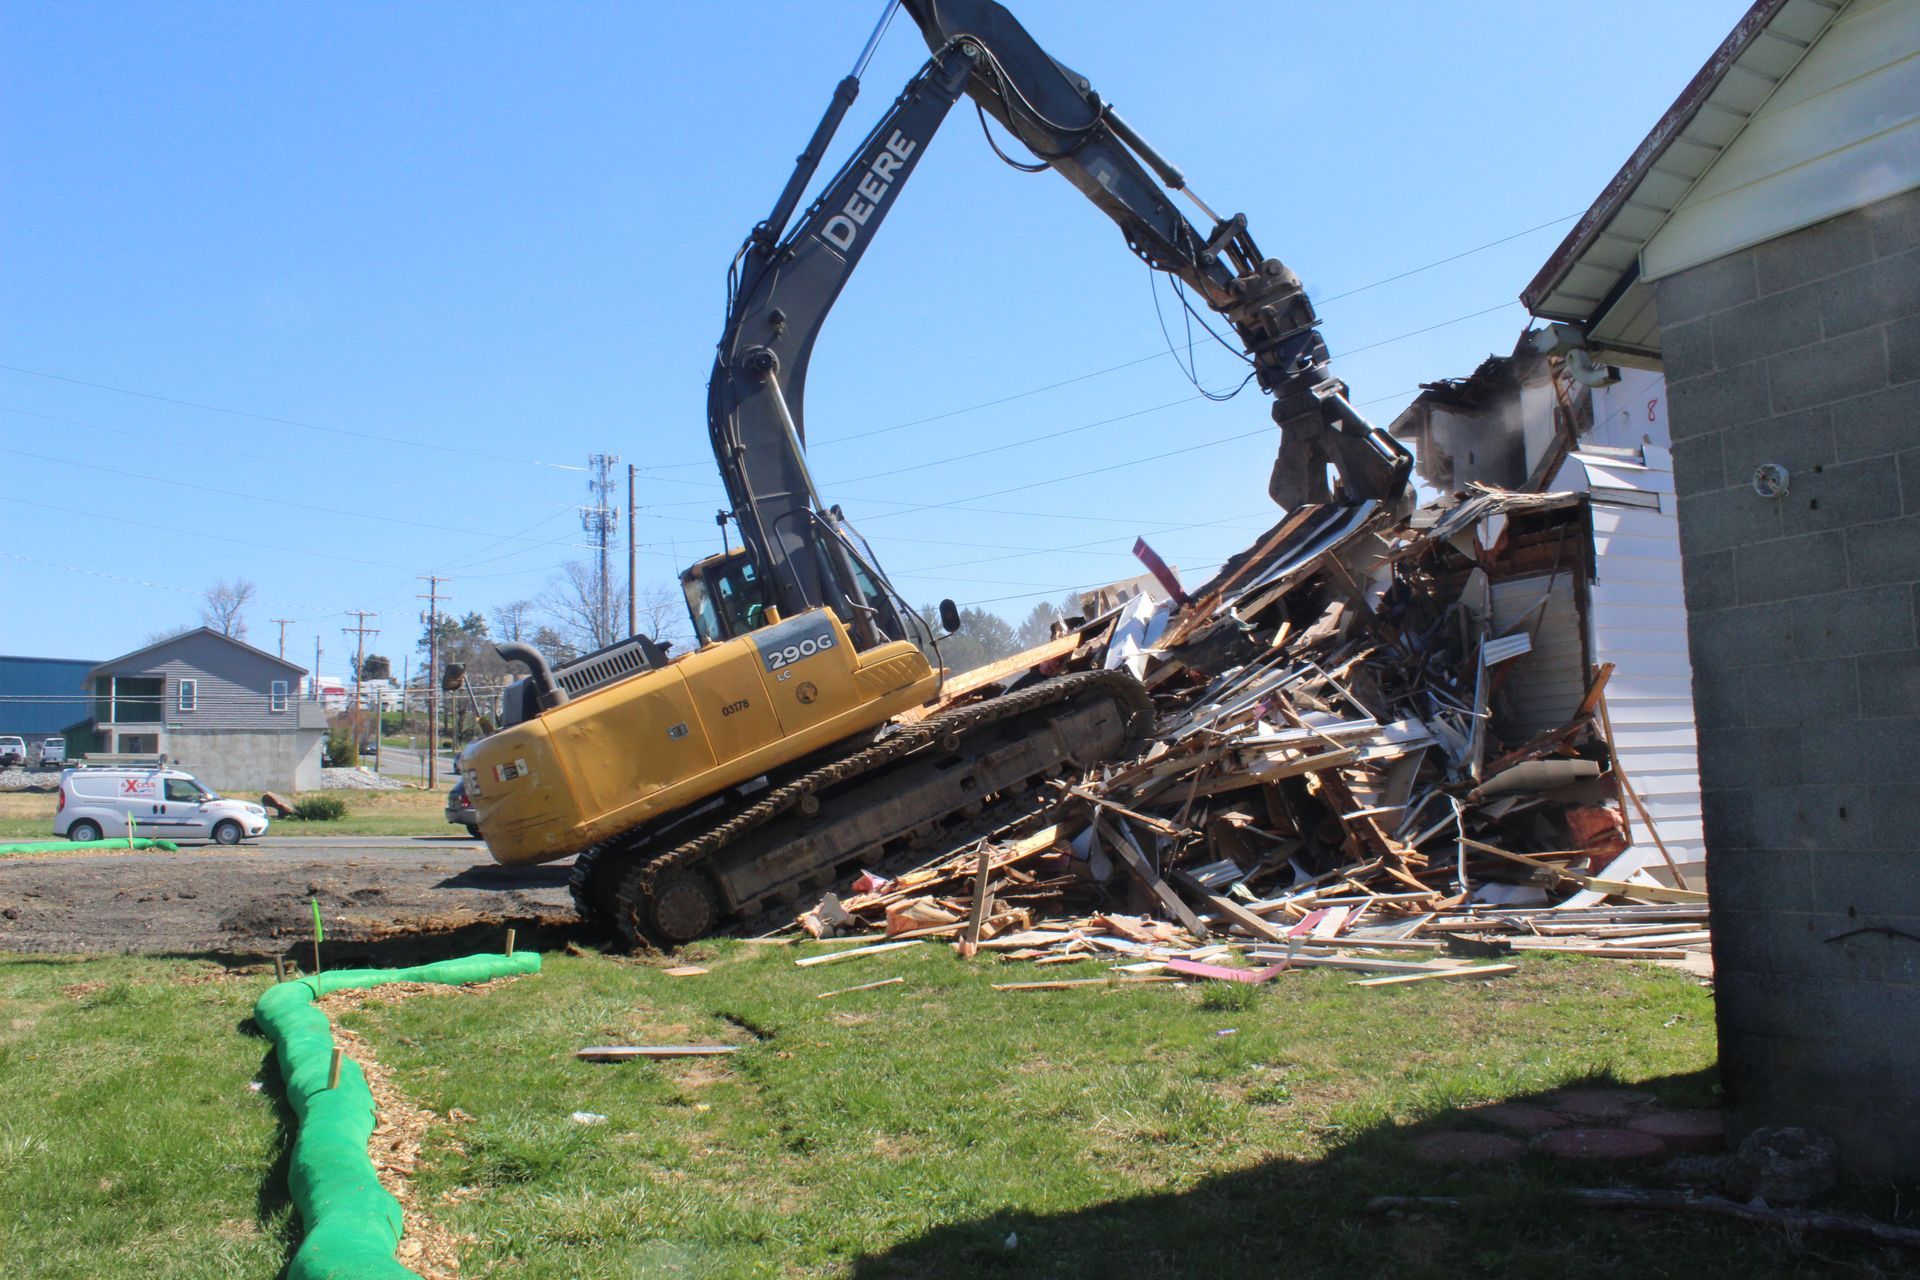 A large deere excavator is demolishing a house